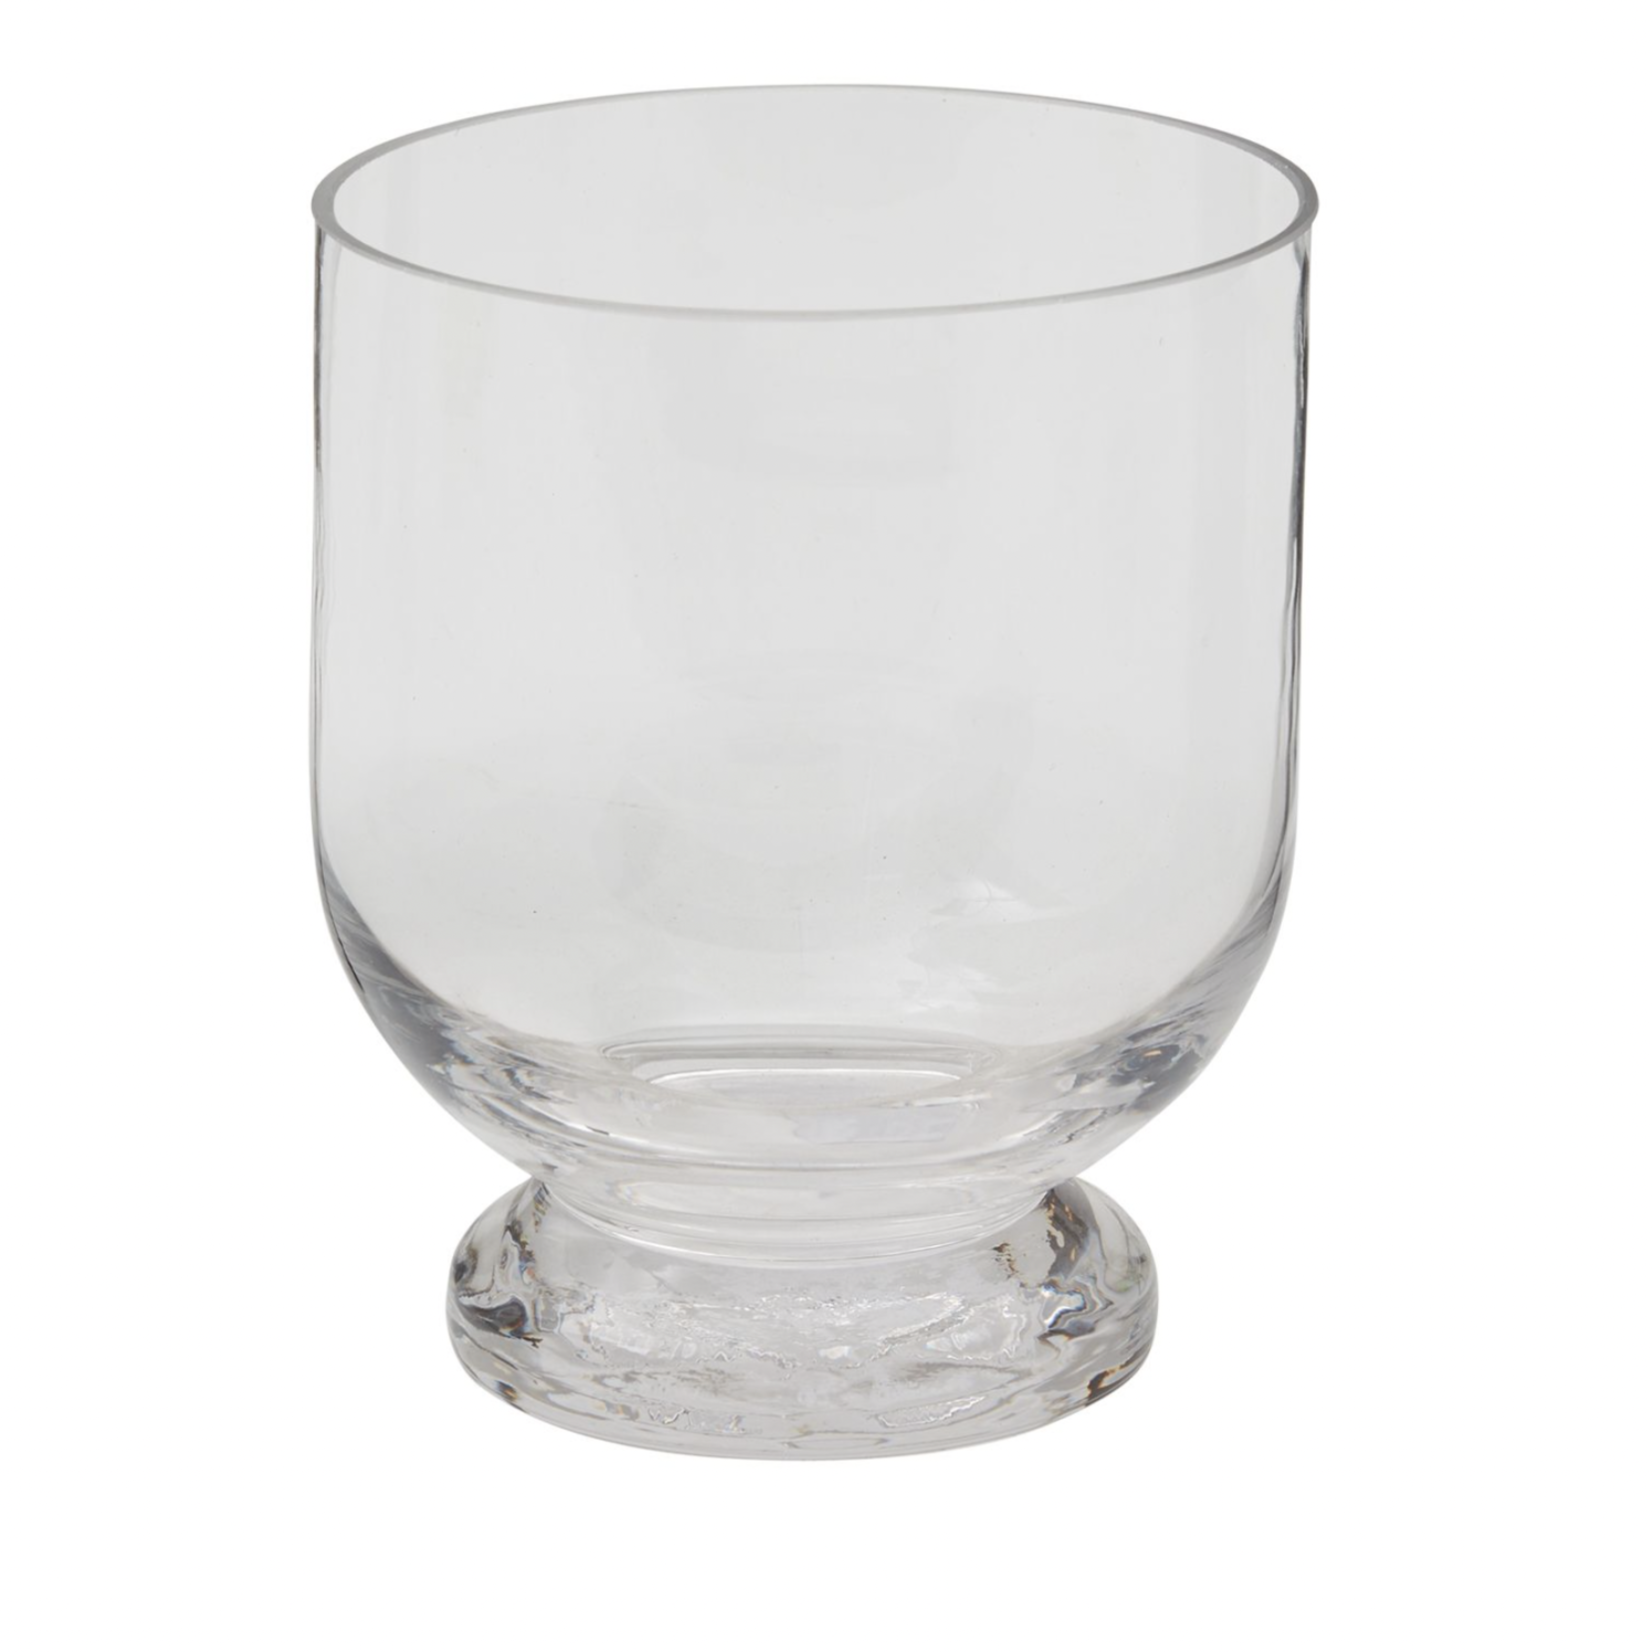 6.75”H X 5.25” GLASS HOLLIS PEDESTAL VASE